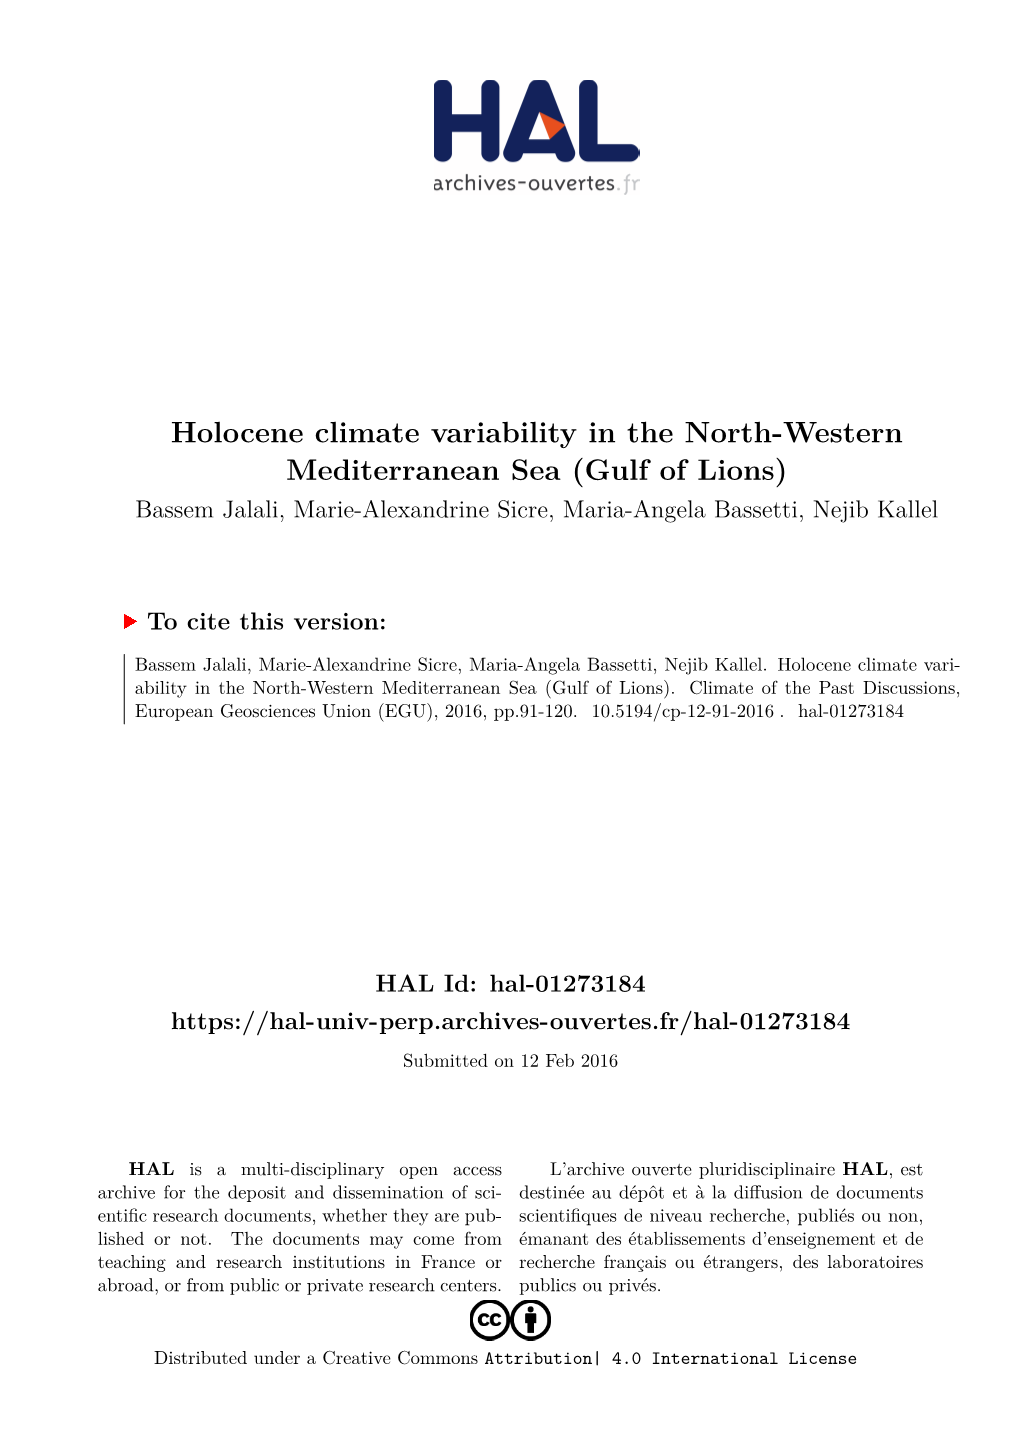 Holocene Climate Variability in the North-Western Mediterranean Sea (Gulf of Lions) Bassem Jalali, Marie-Alexandrine Sicre, Maria-Angela Bassetti, Nejib Kallel